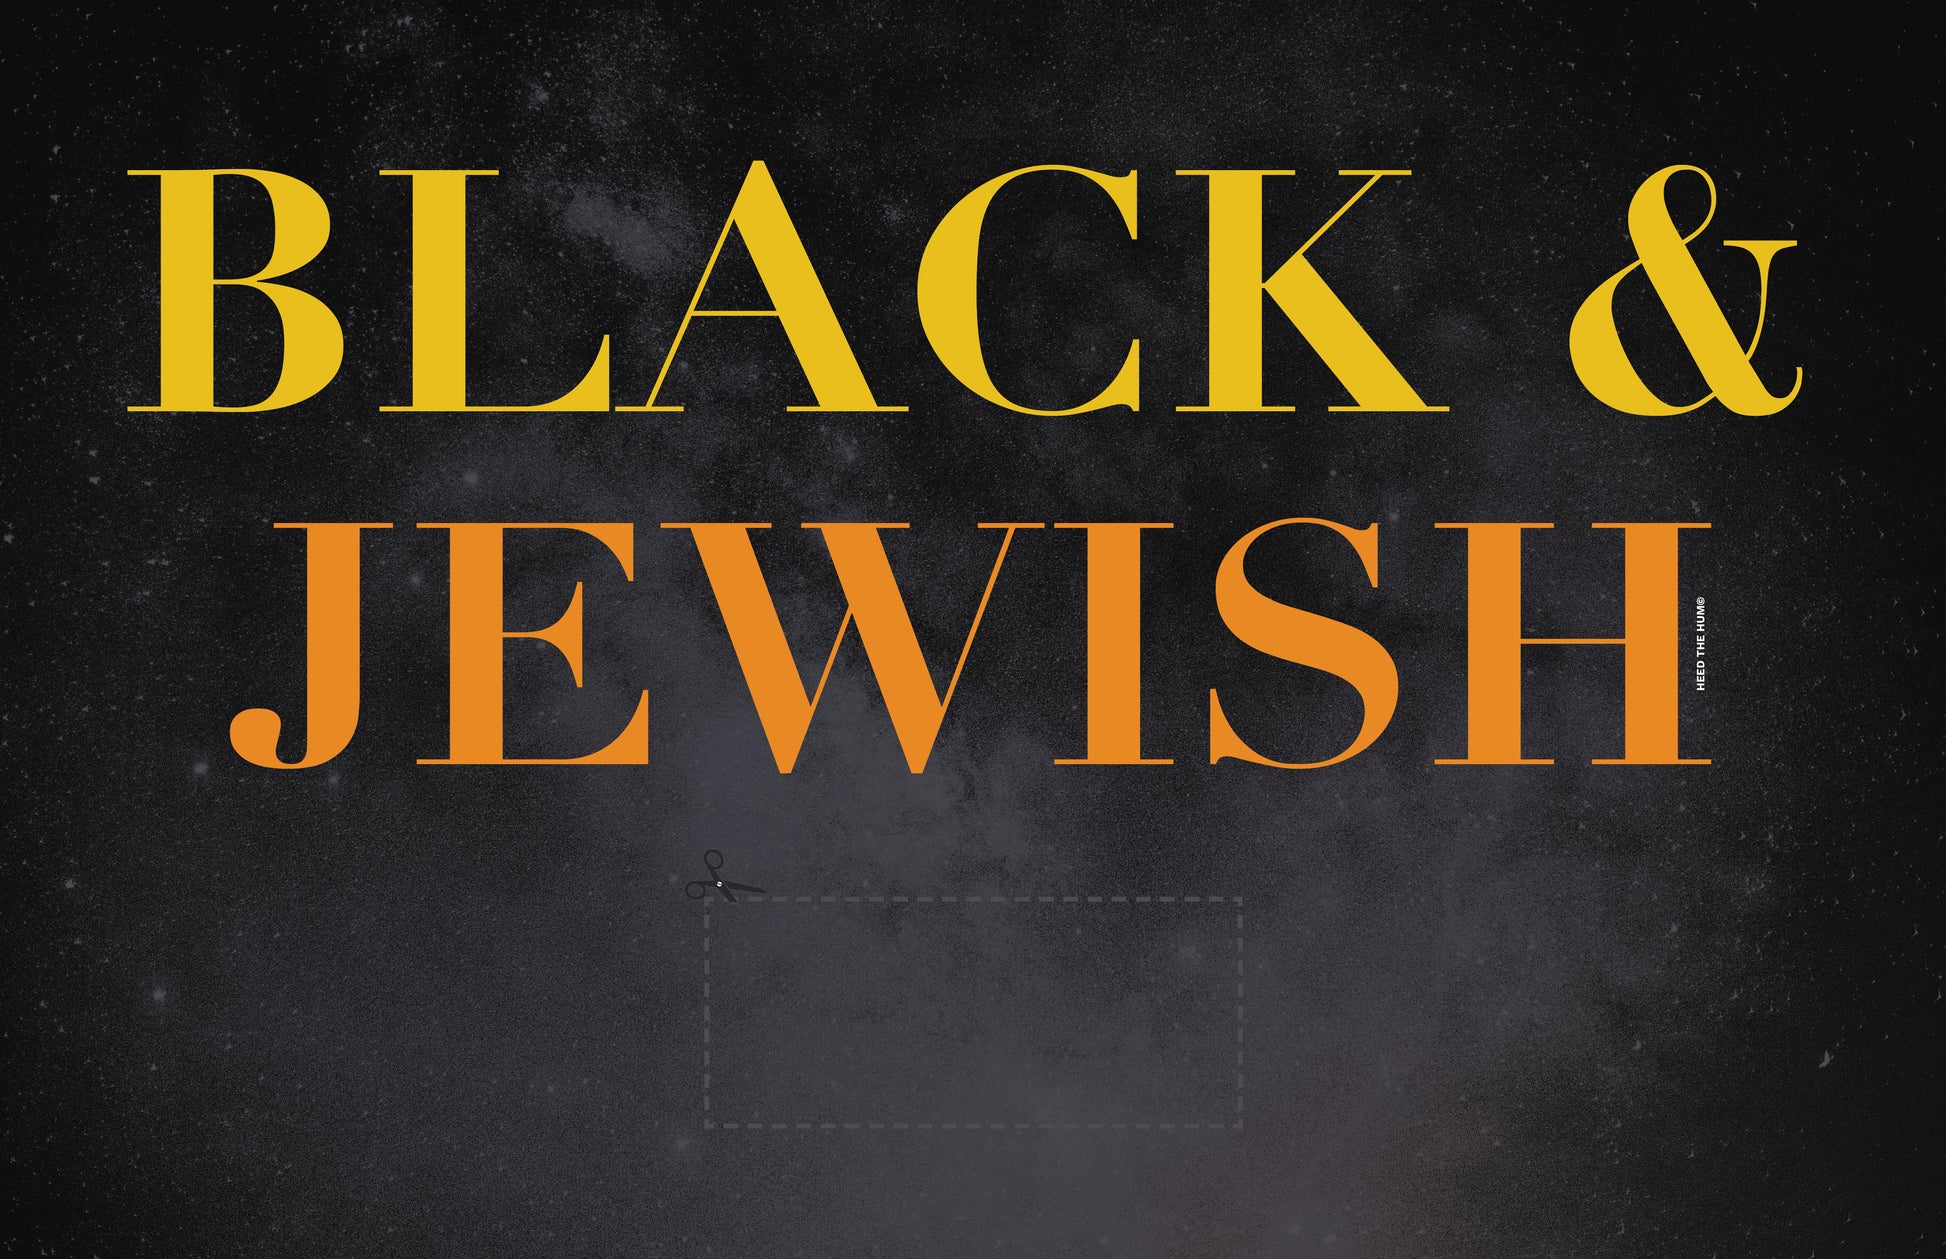 Black and Jewish orange, yellow and black sign